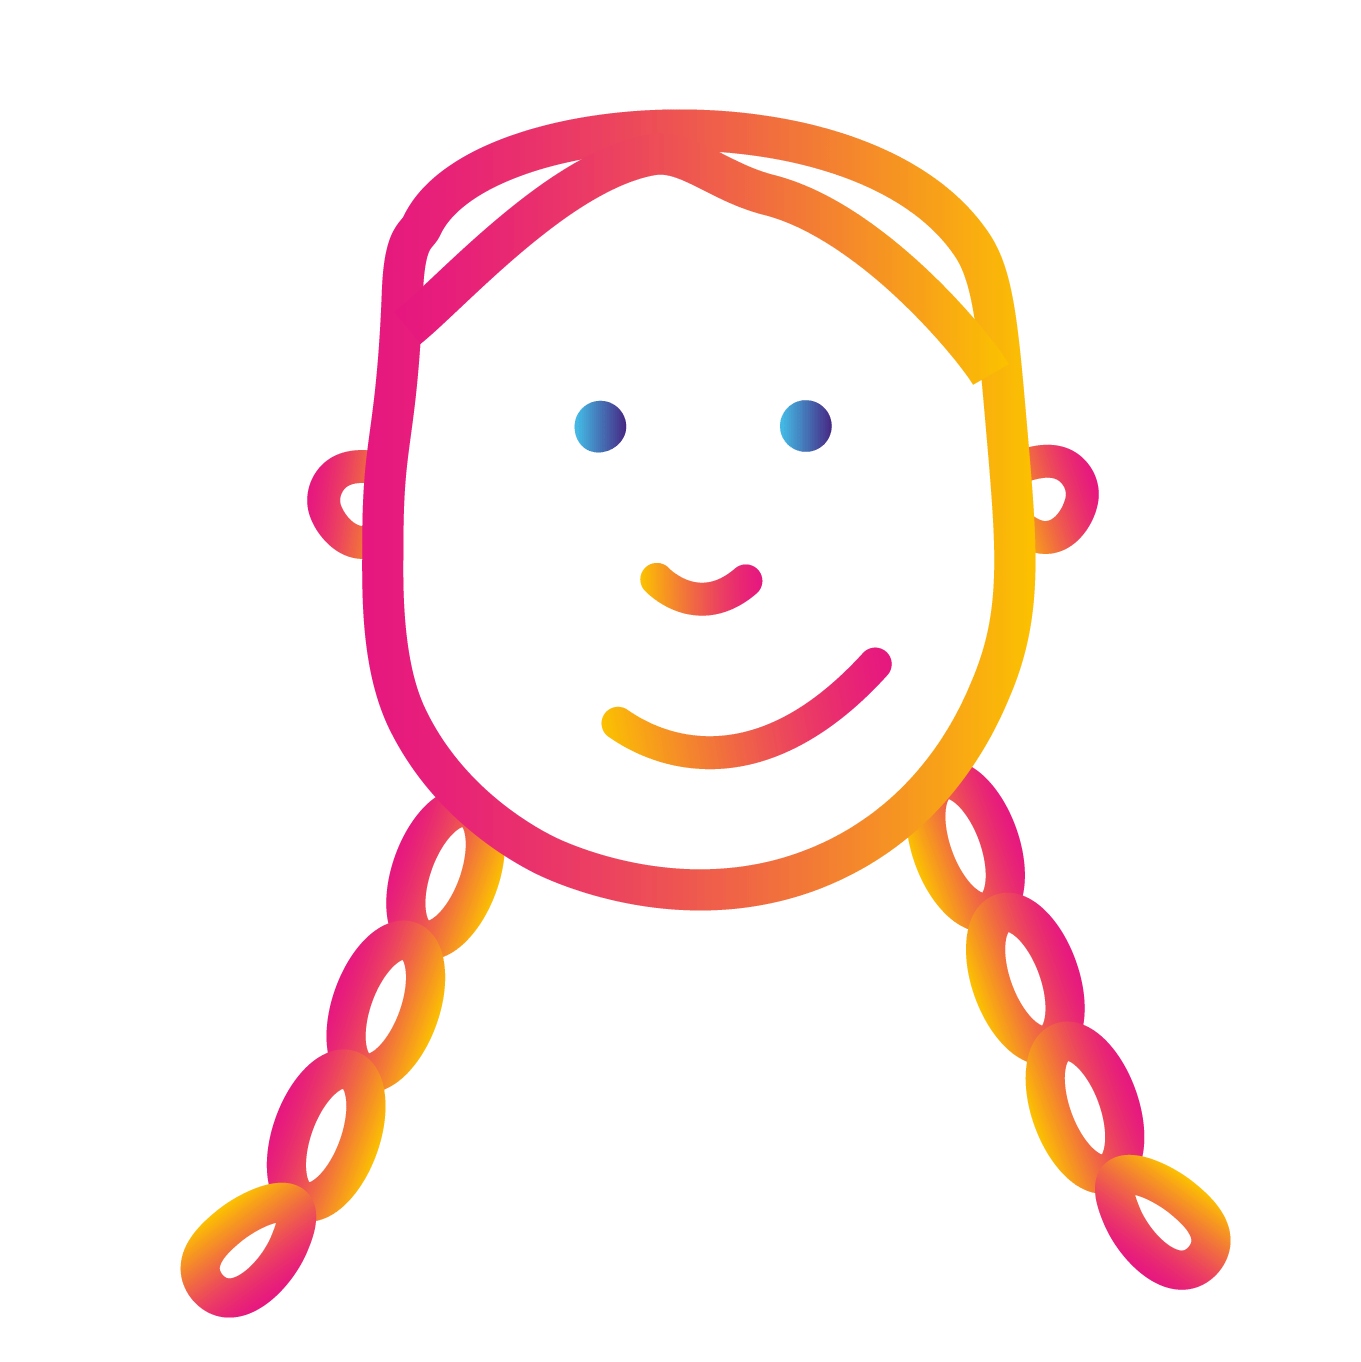 icon of a smiling girl with plaits - Greta Thunberg